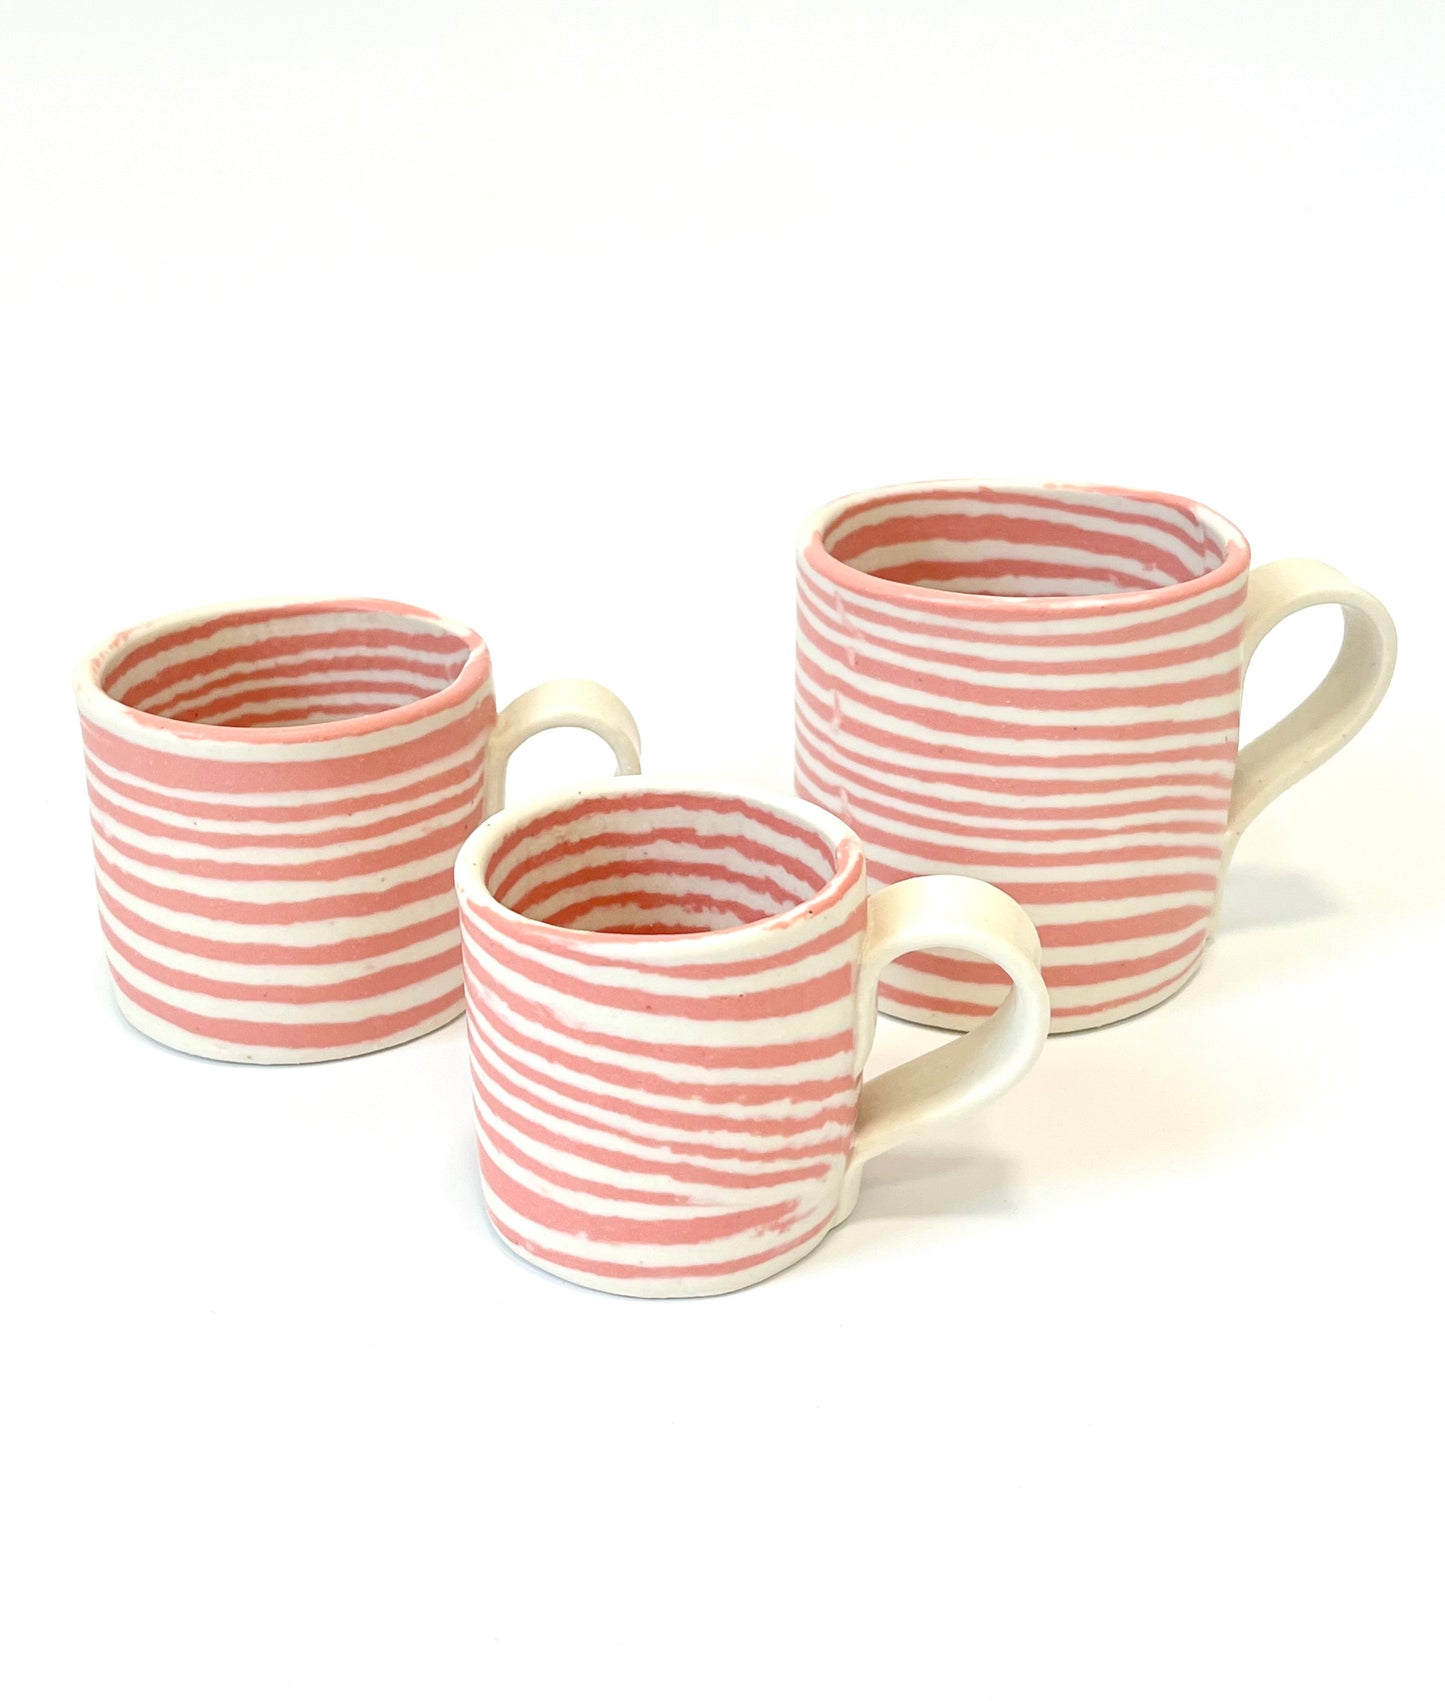 Ceramic Nerikomi Mug - Small - Pink Stripes